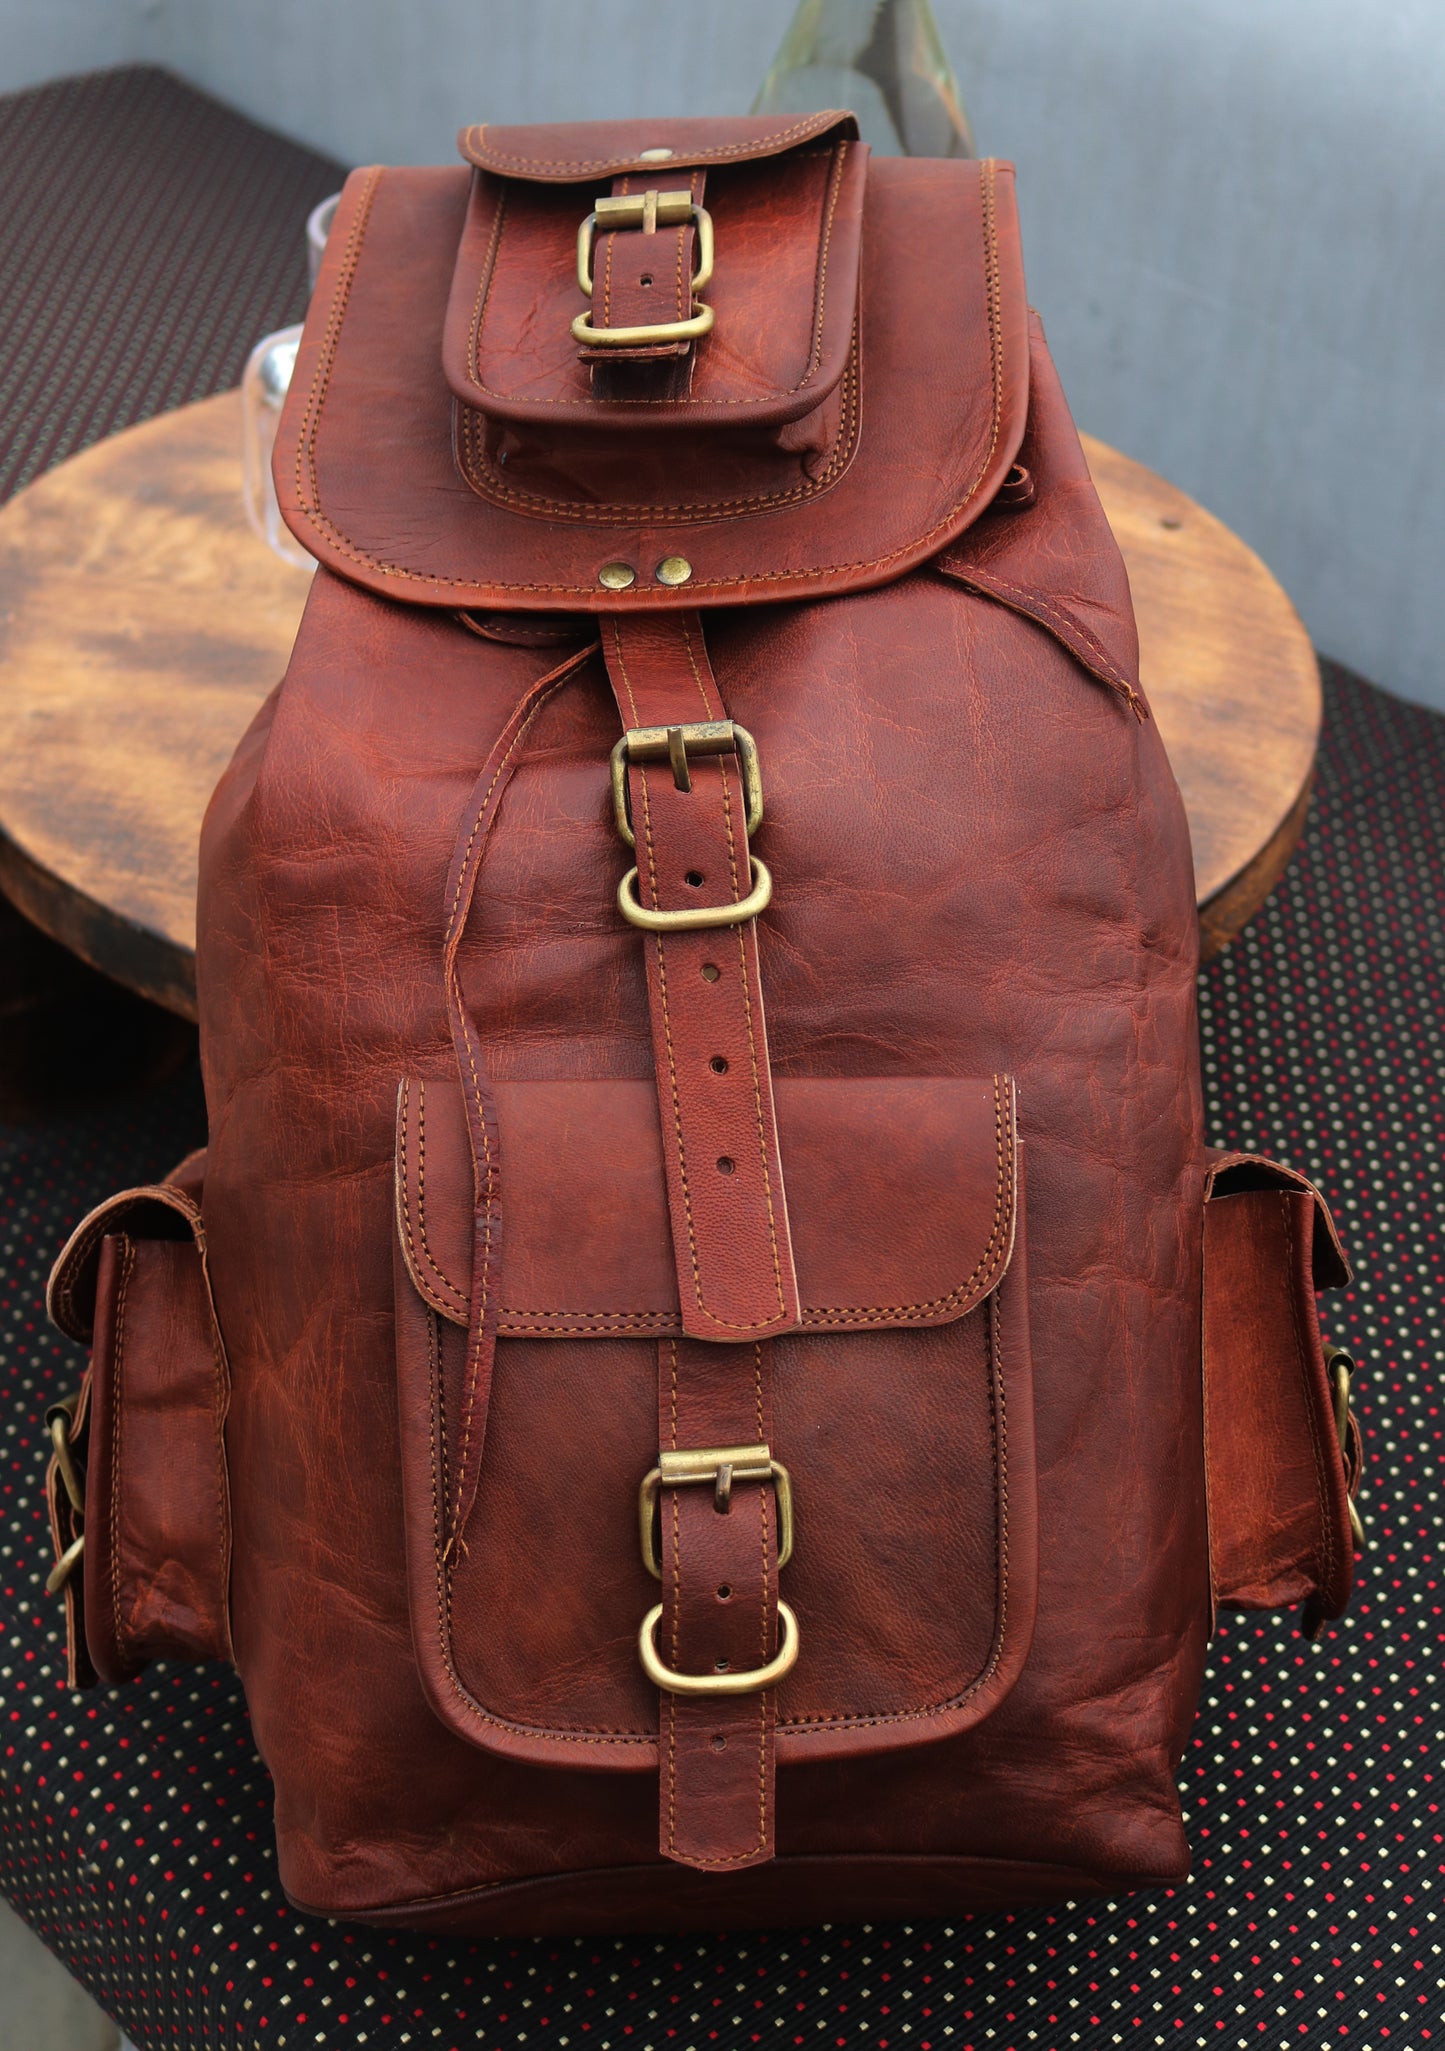 ANUENT Handmade Leather Travel Rucksack Backpack.